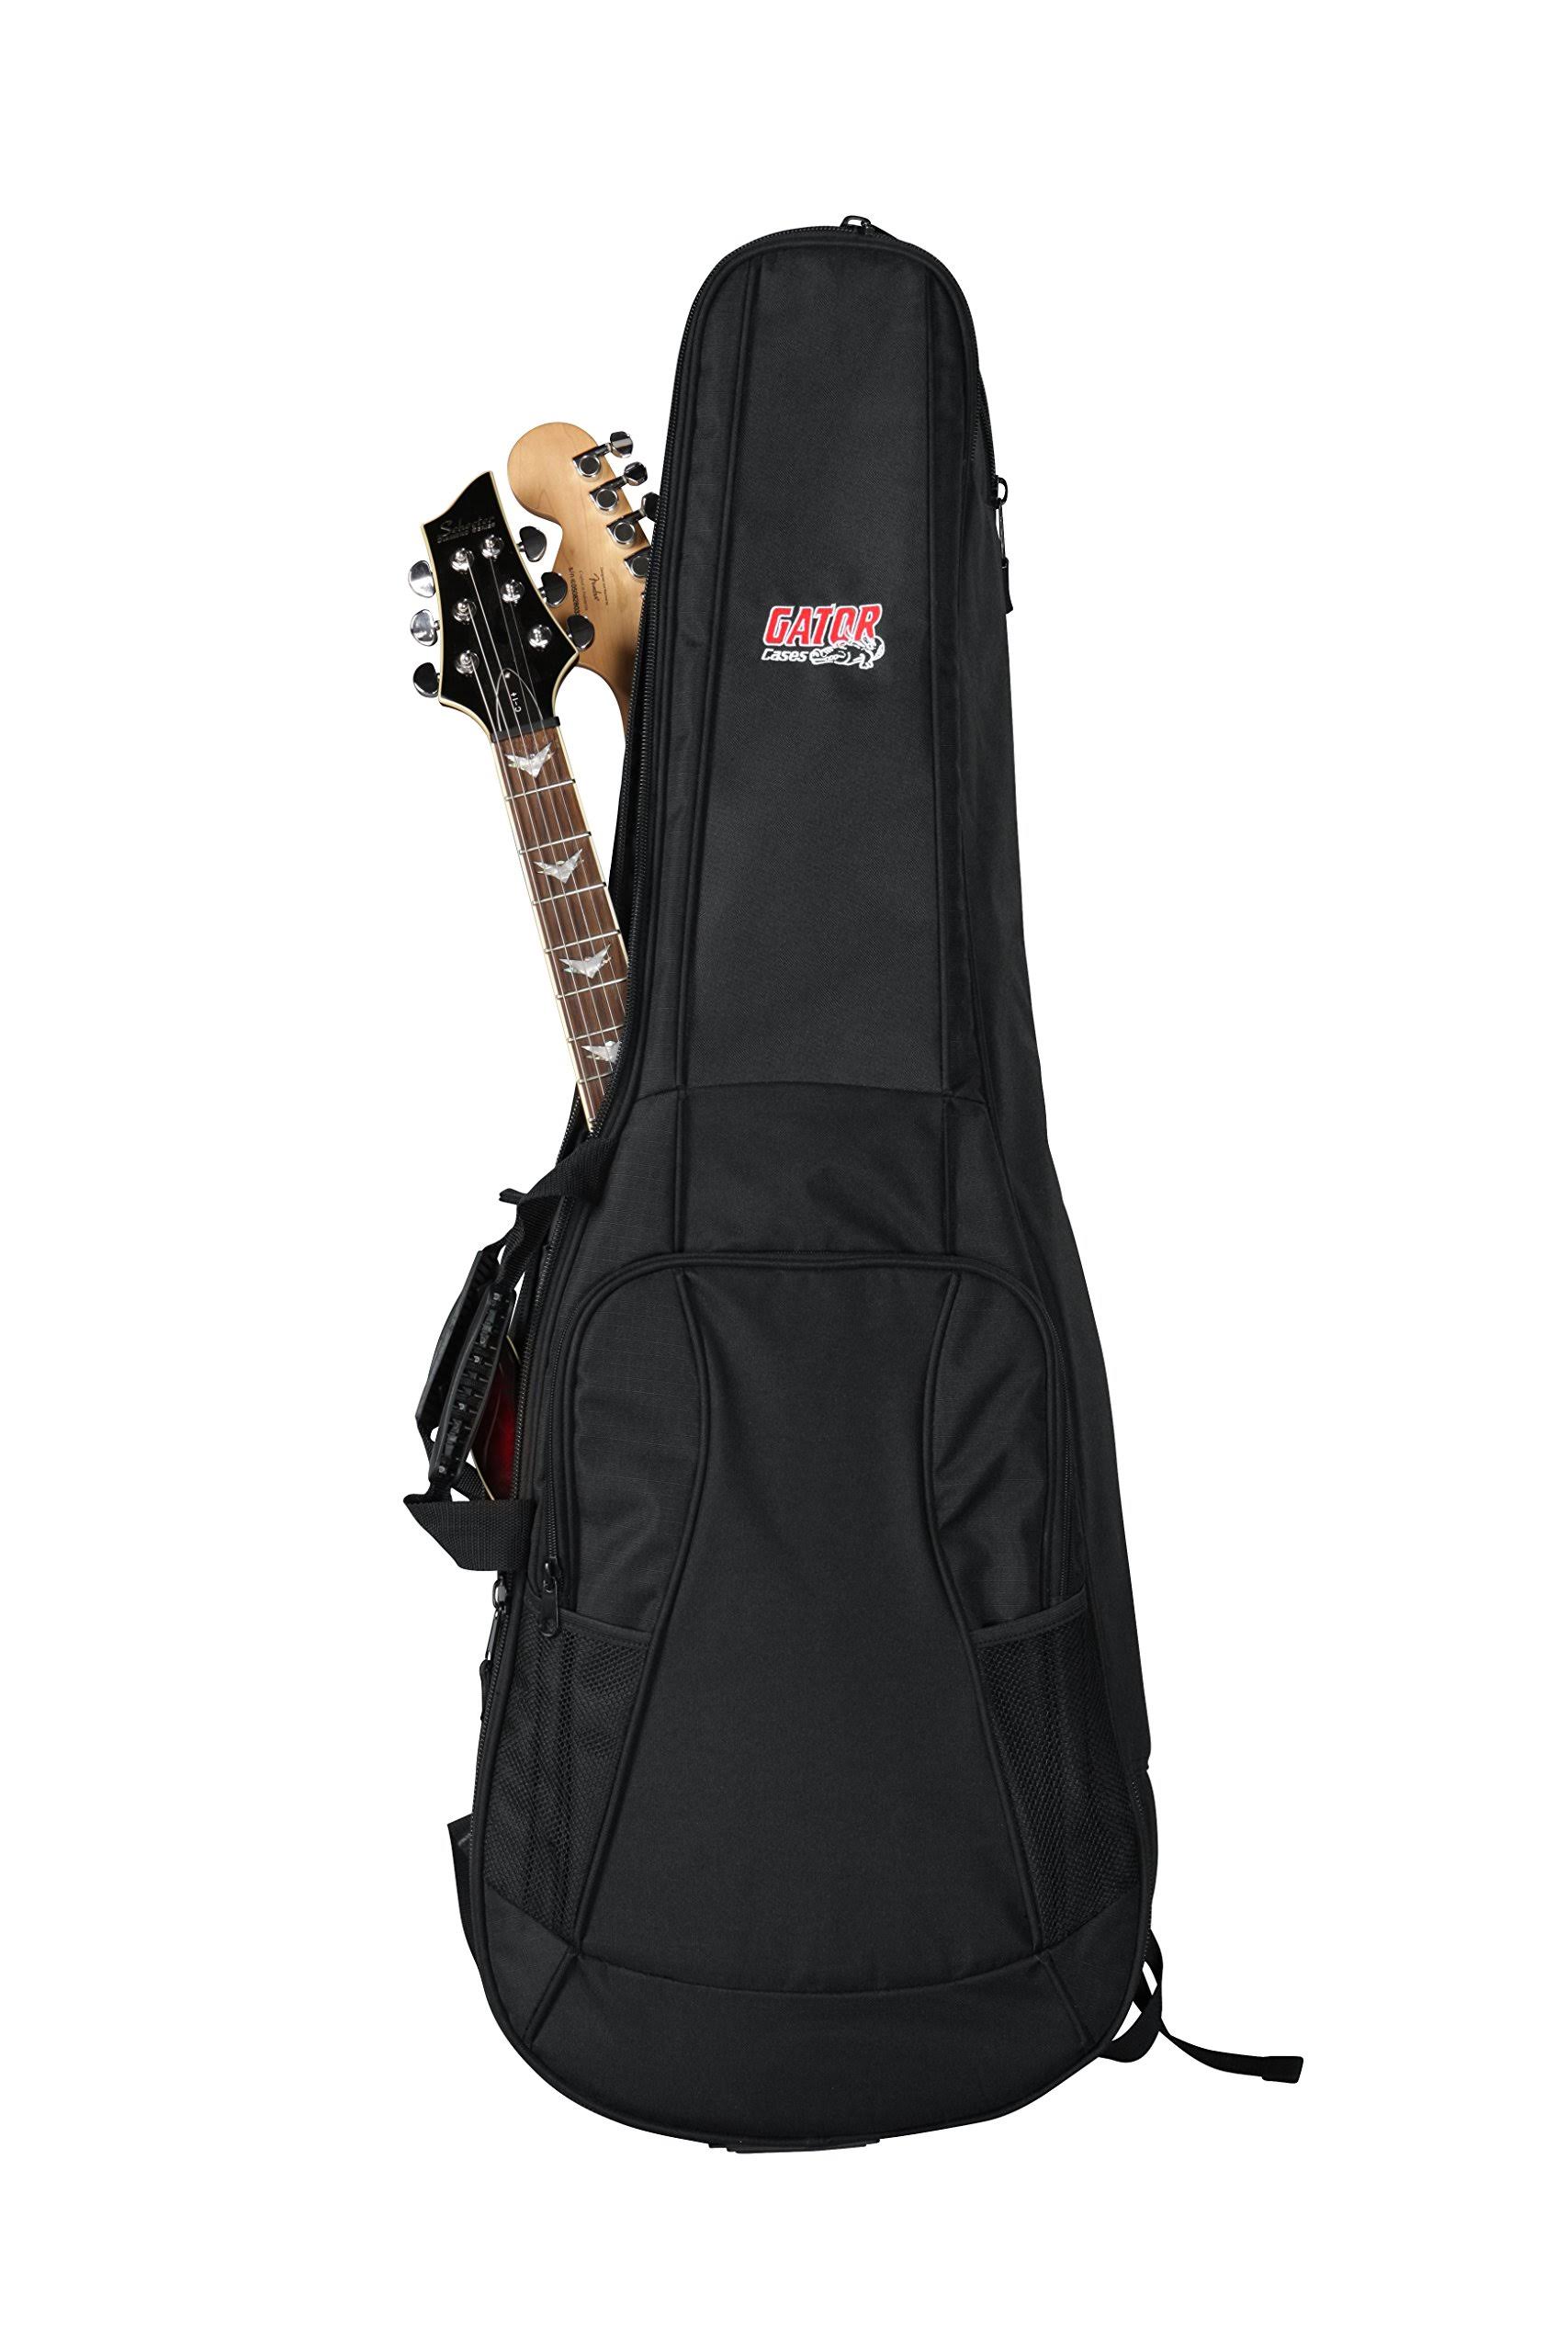 Gator GB-4G-ELECX2 4G Style Gig Bag for 2 Electric Guitars